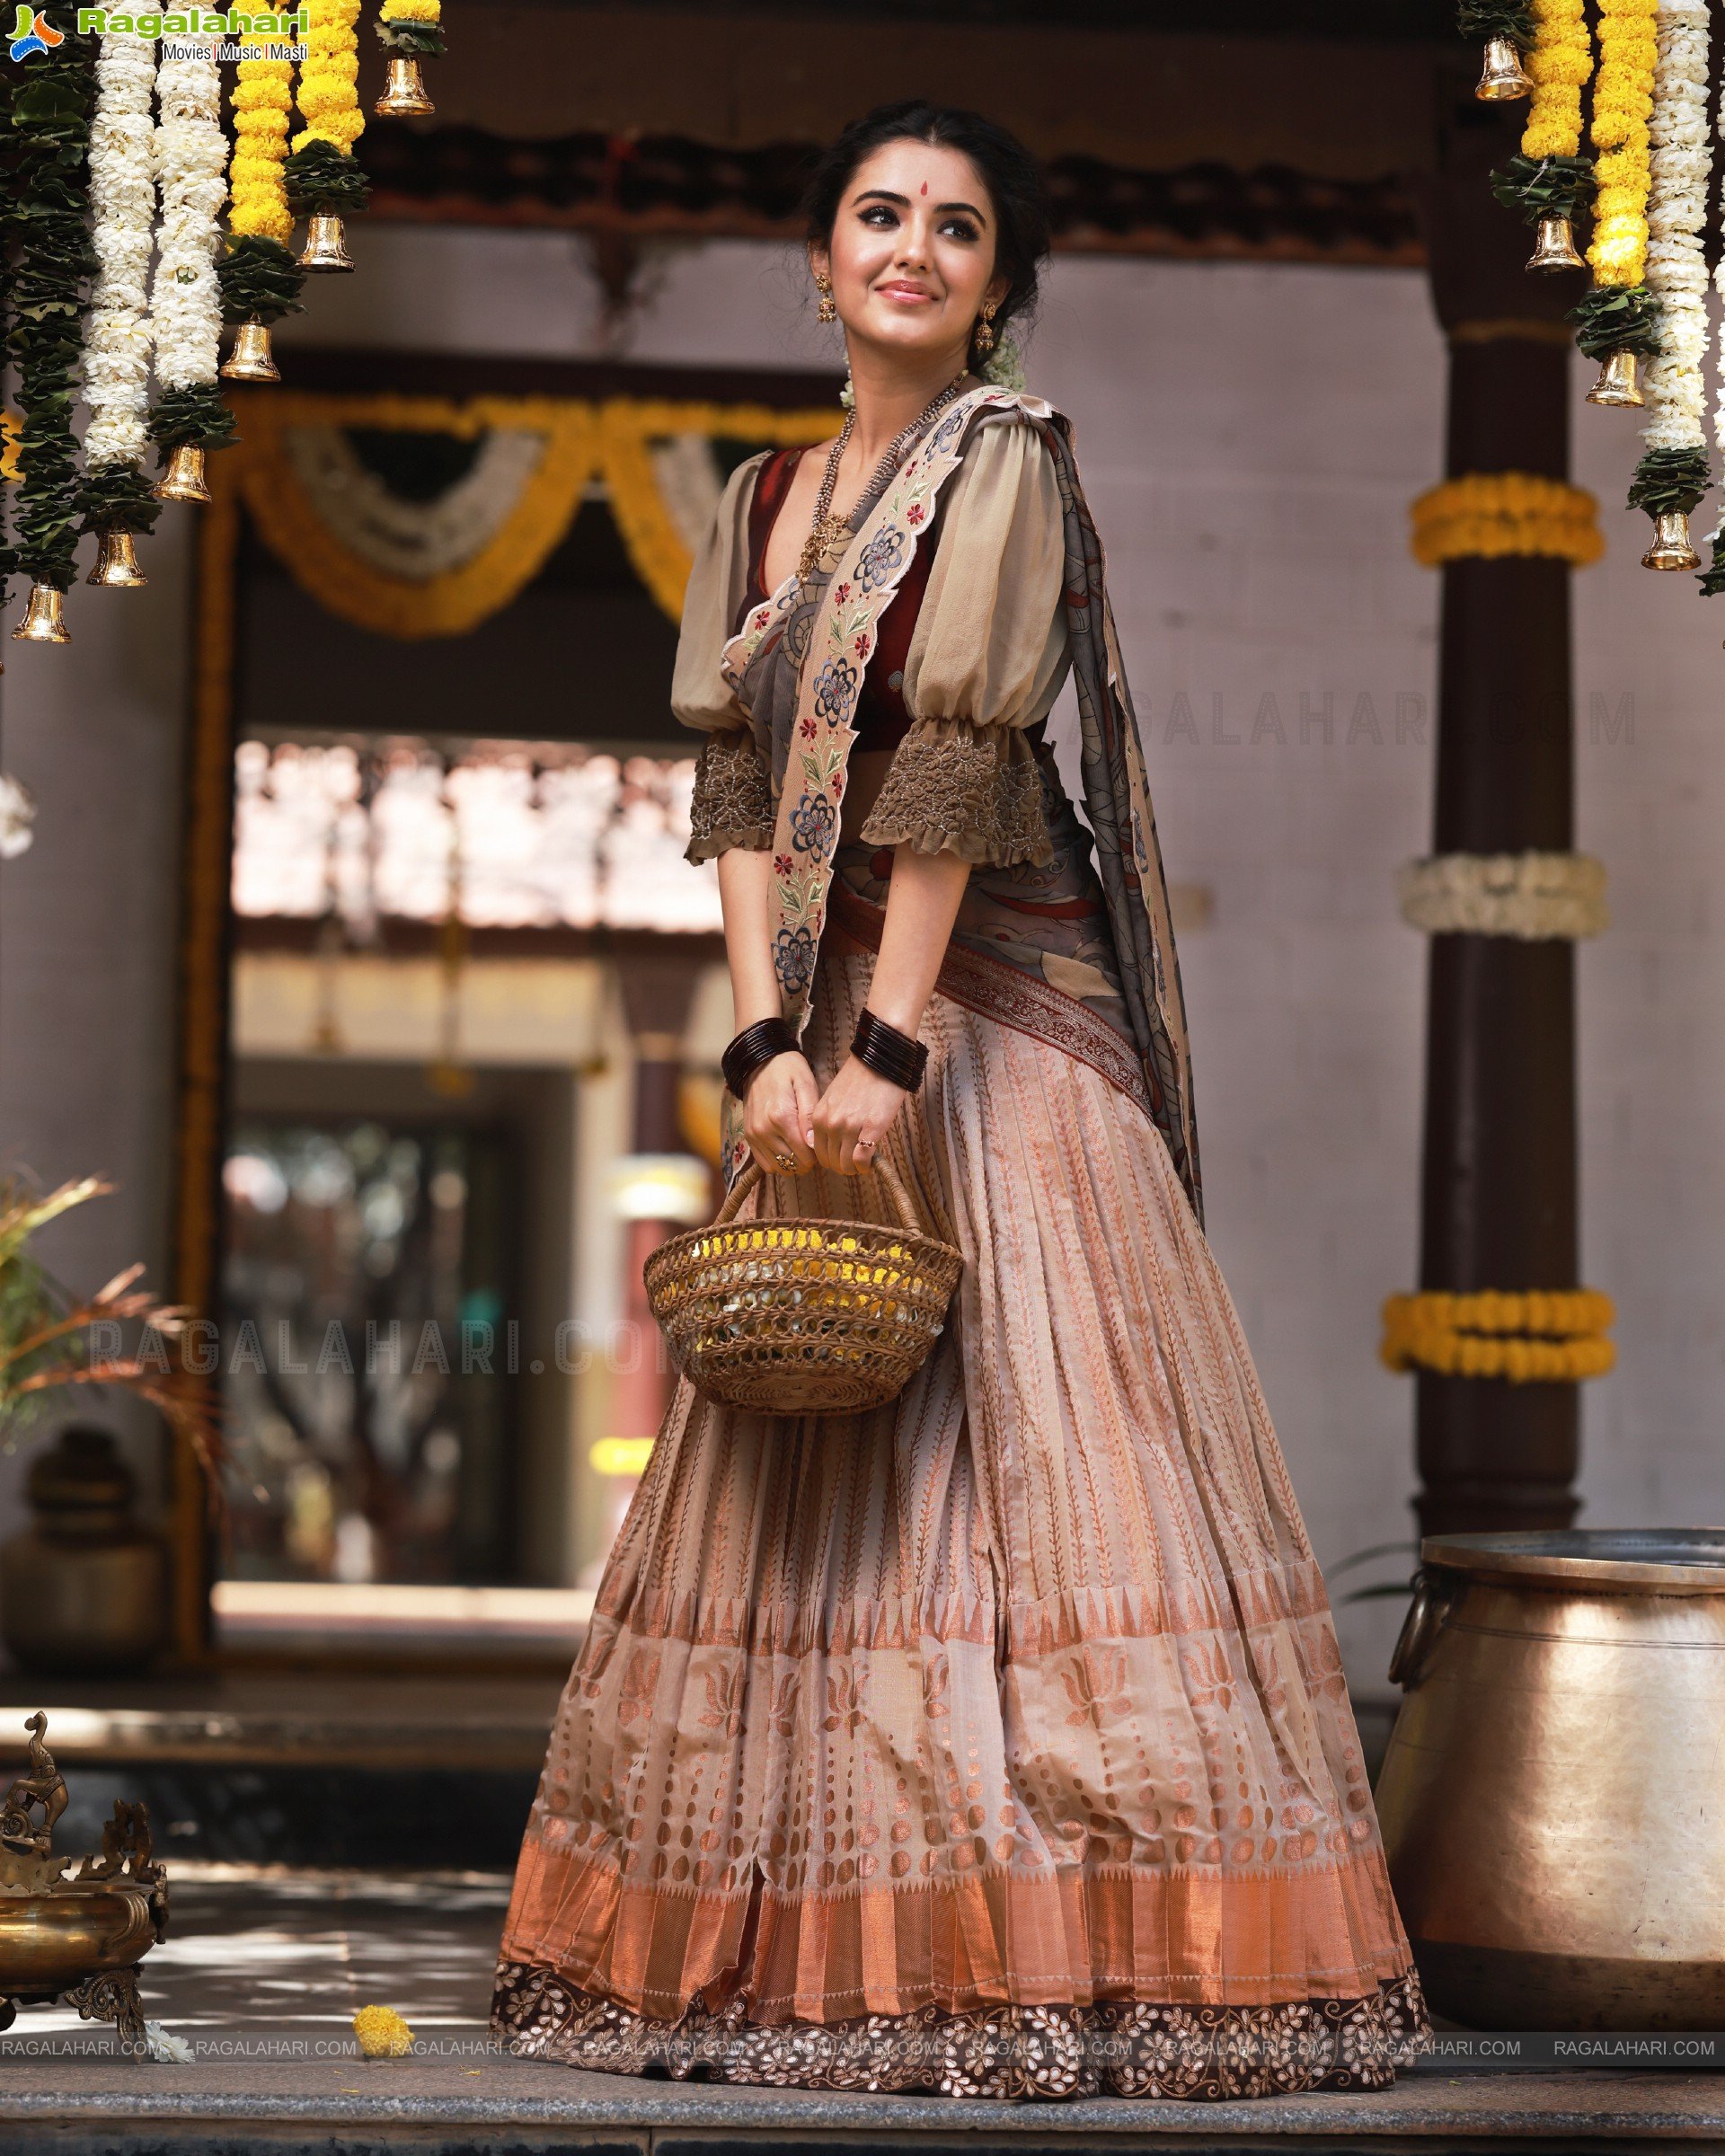 Malvika Sharma in Traditional Dress, HD Photo Gallery